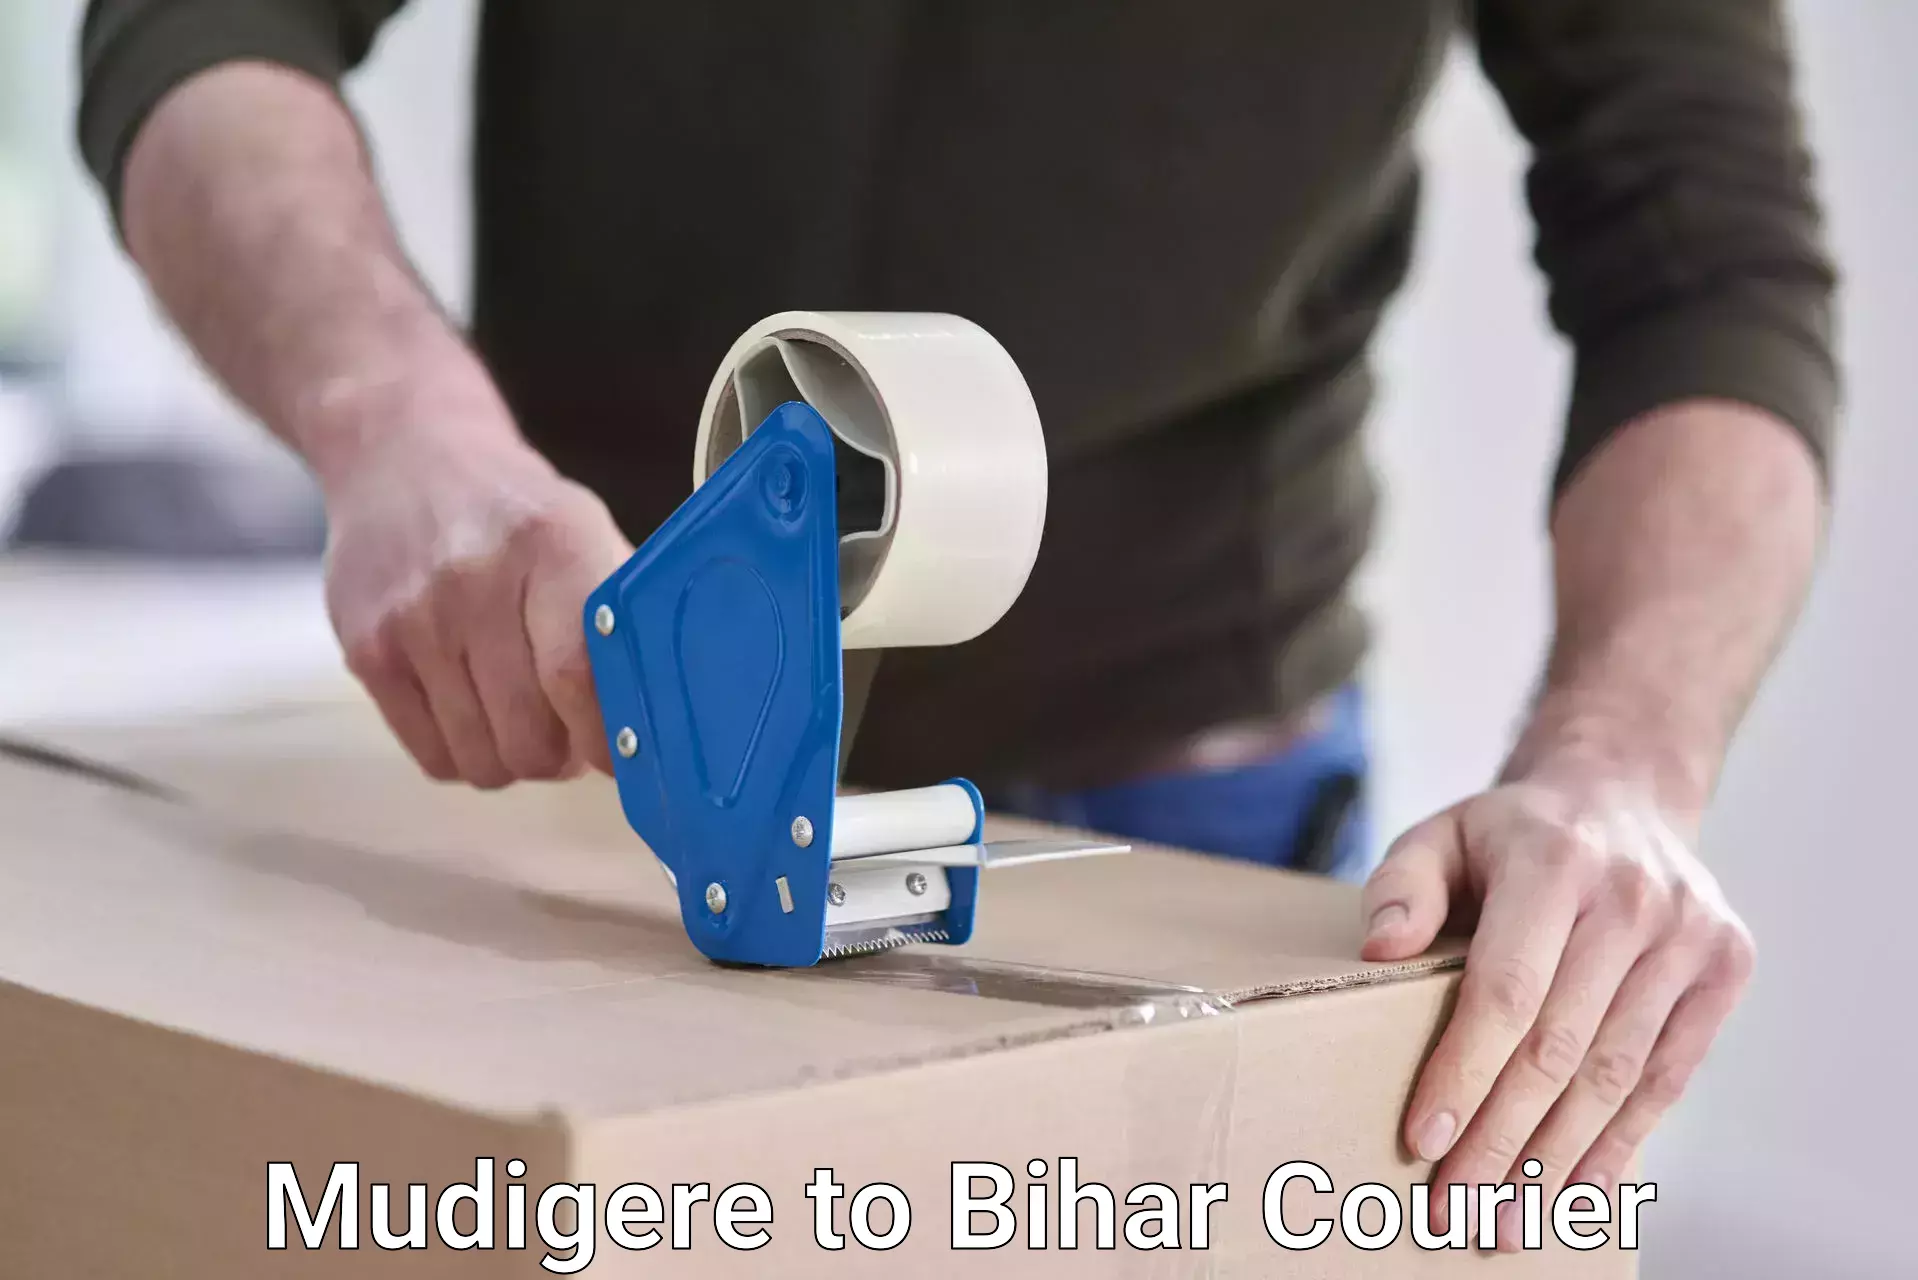 Courier service comparison Mudigere to Bihar